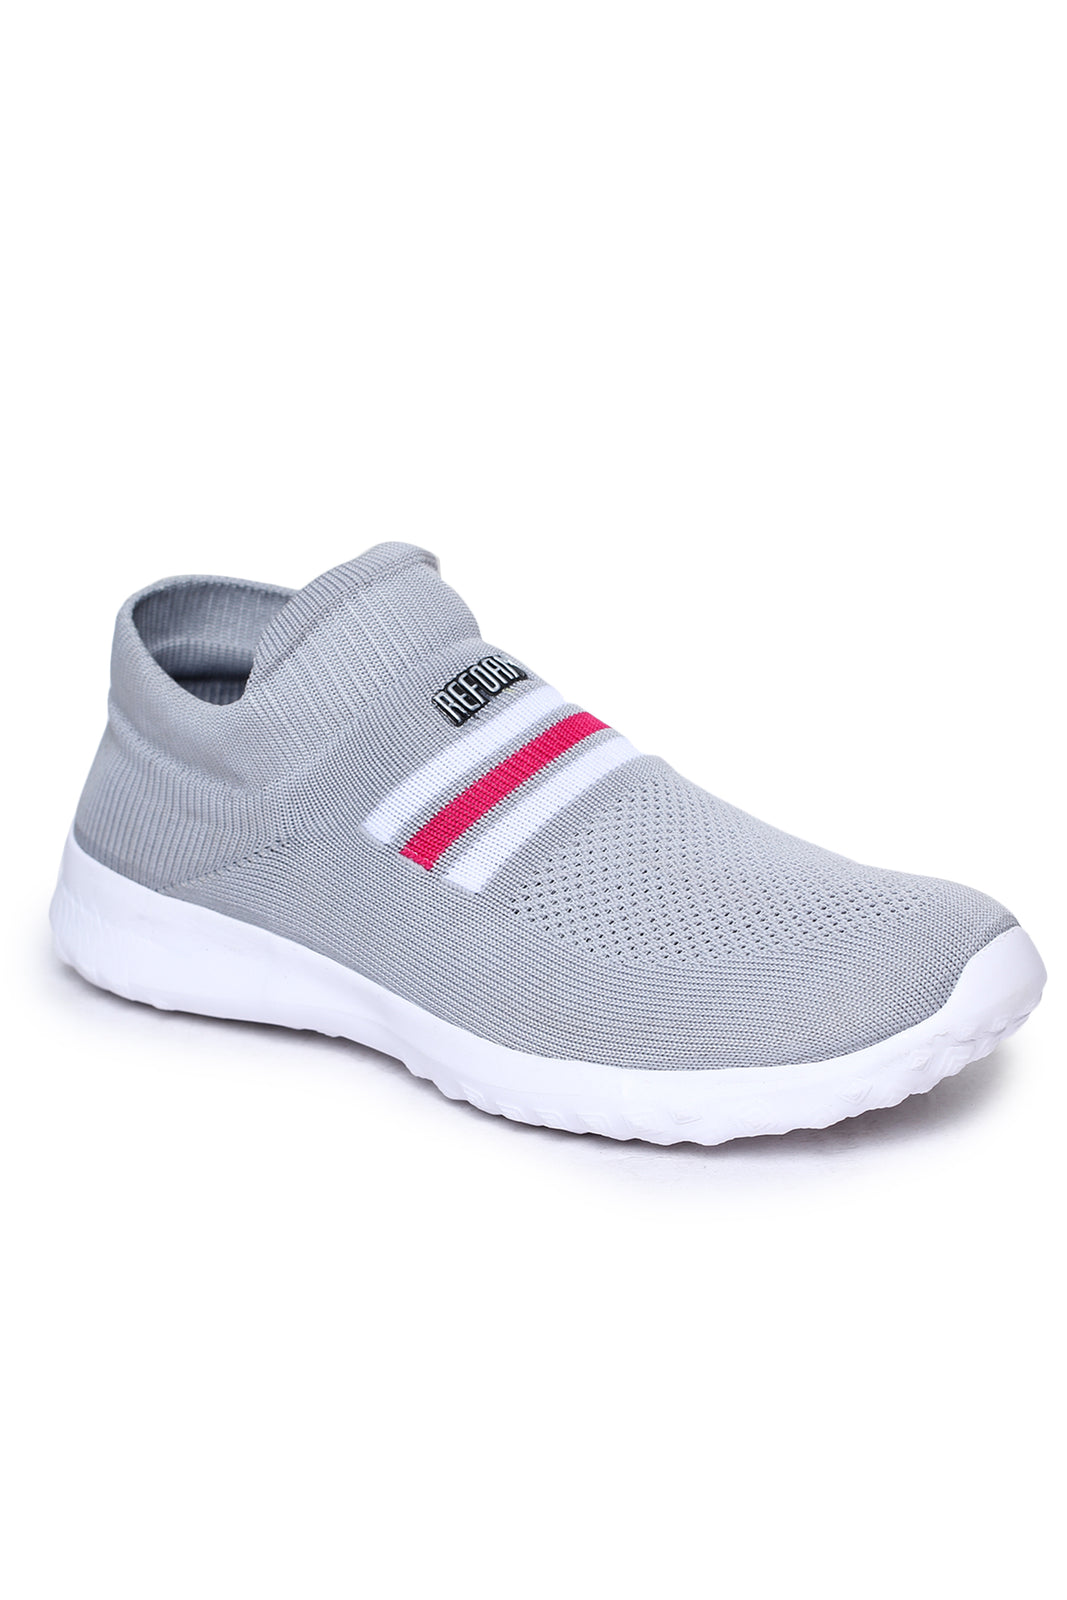 Grey Solid Mesh Slip On Running Sport Shoes For Women